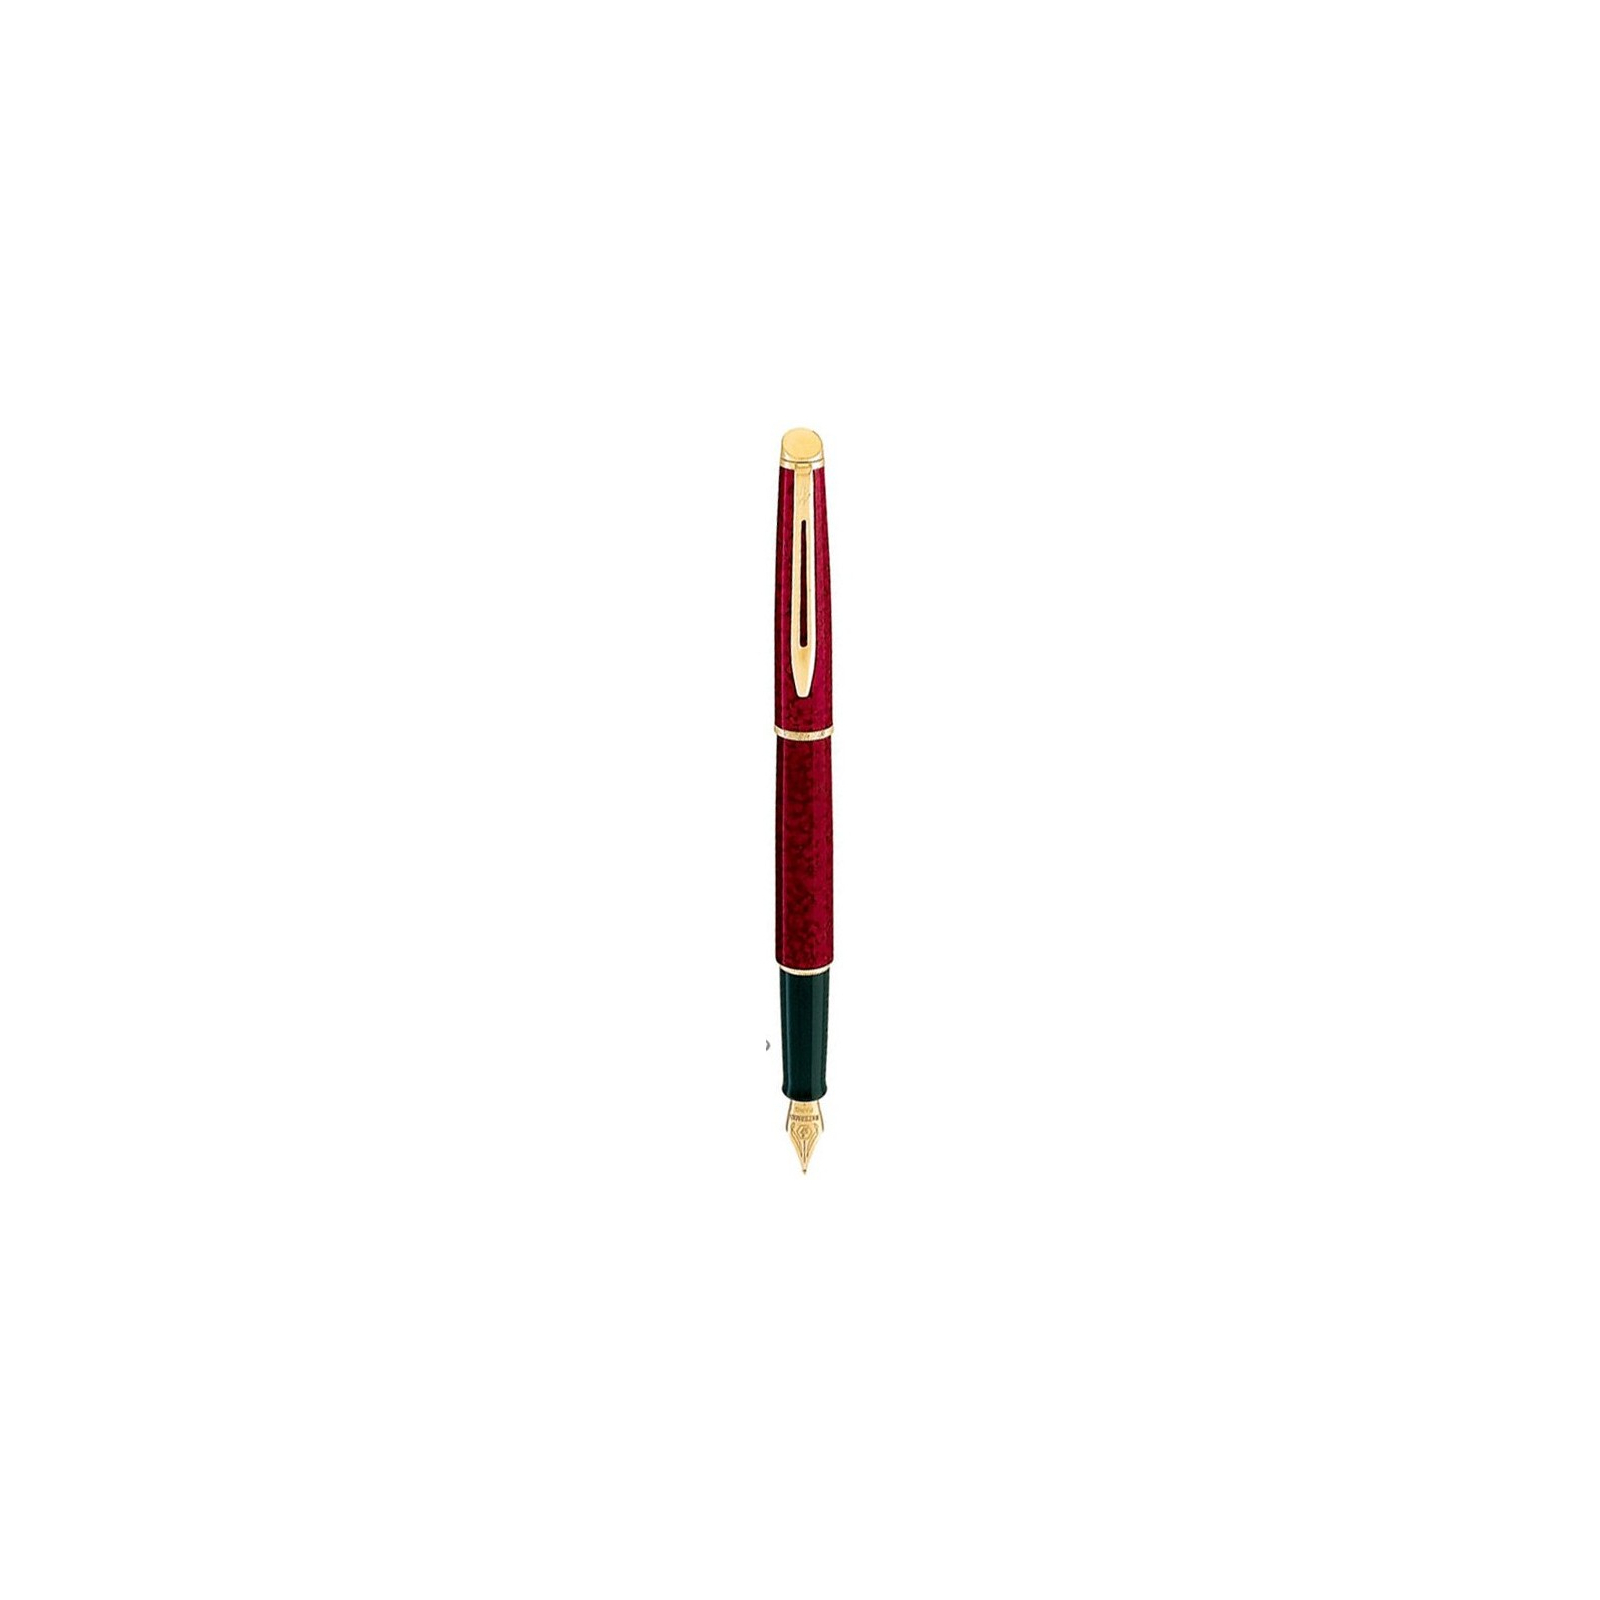 Ручка перьевая Waterman Hemisphere Marblad Red (FP F 12050)